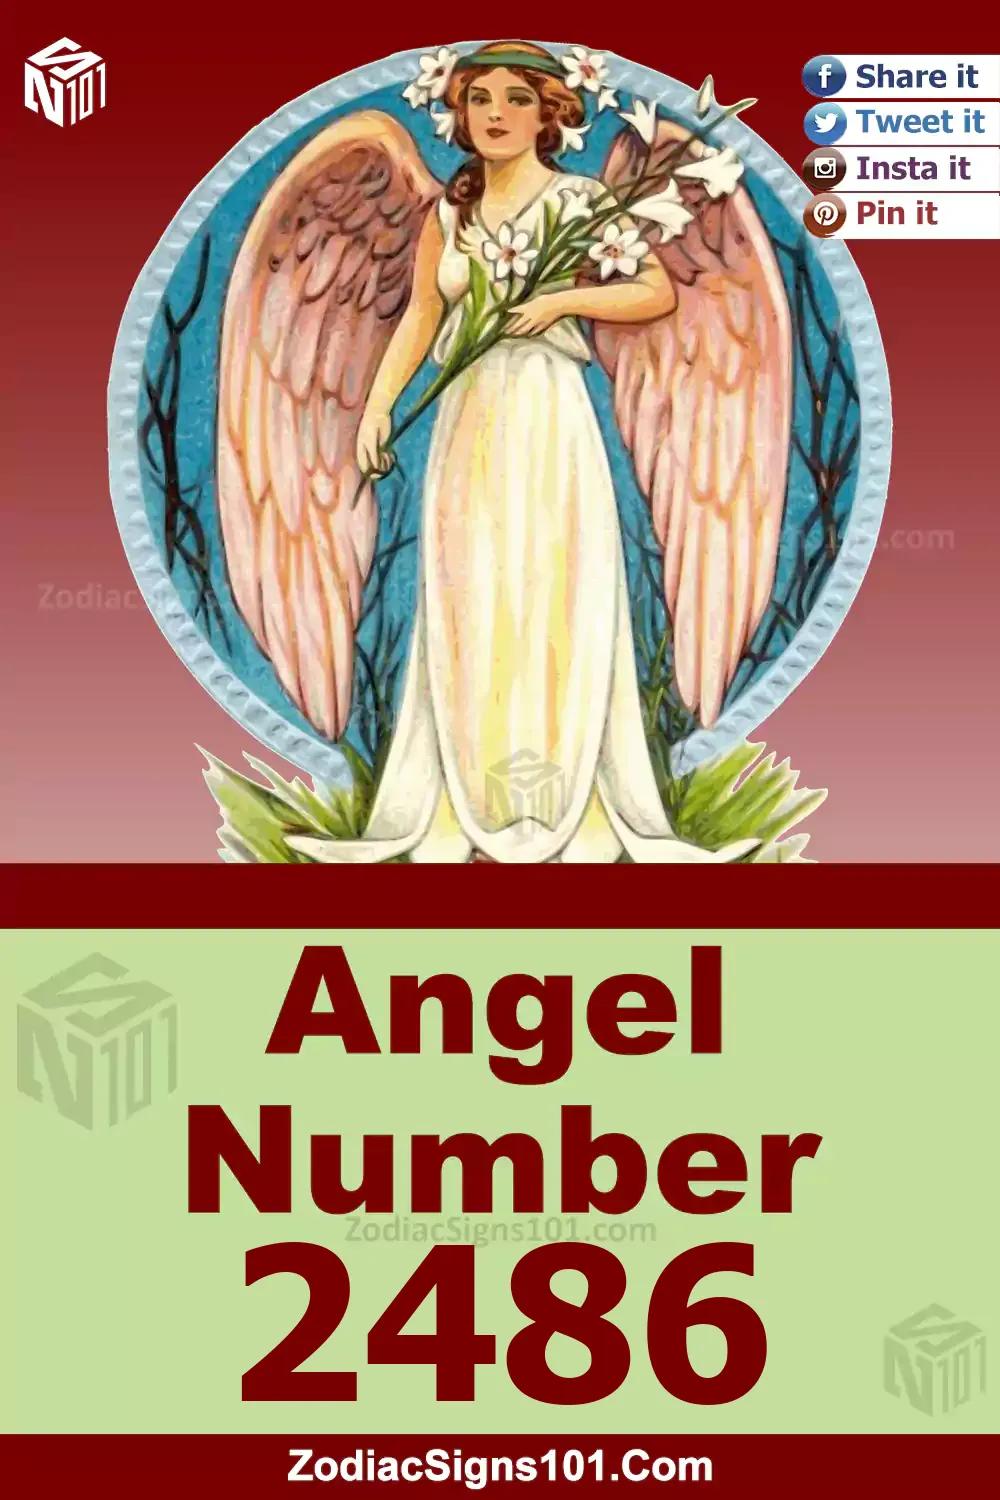 2486-Angel-Number-Meaning.jpg